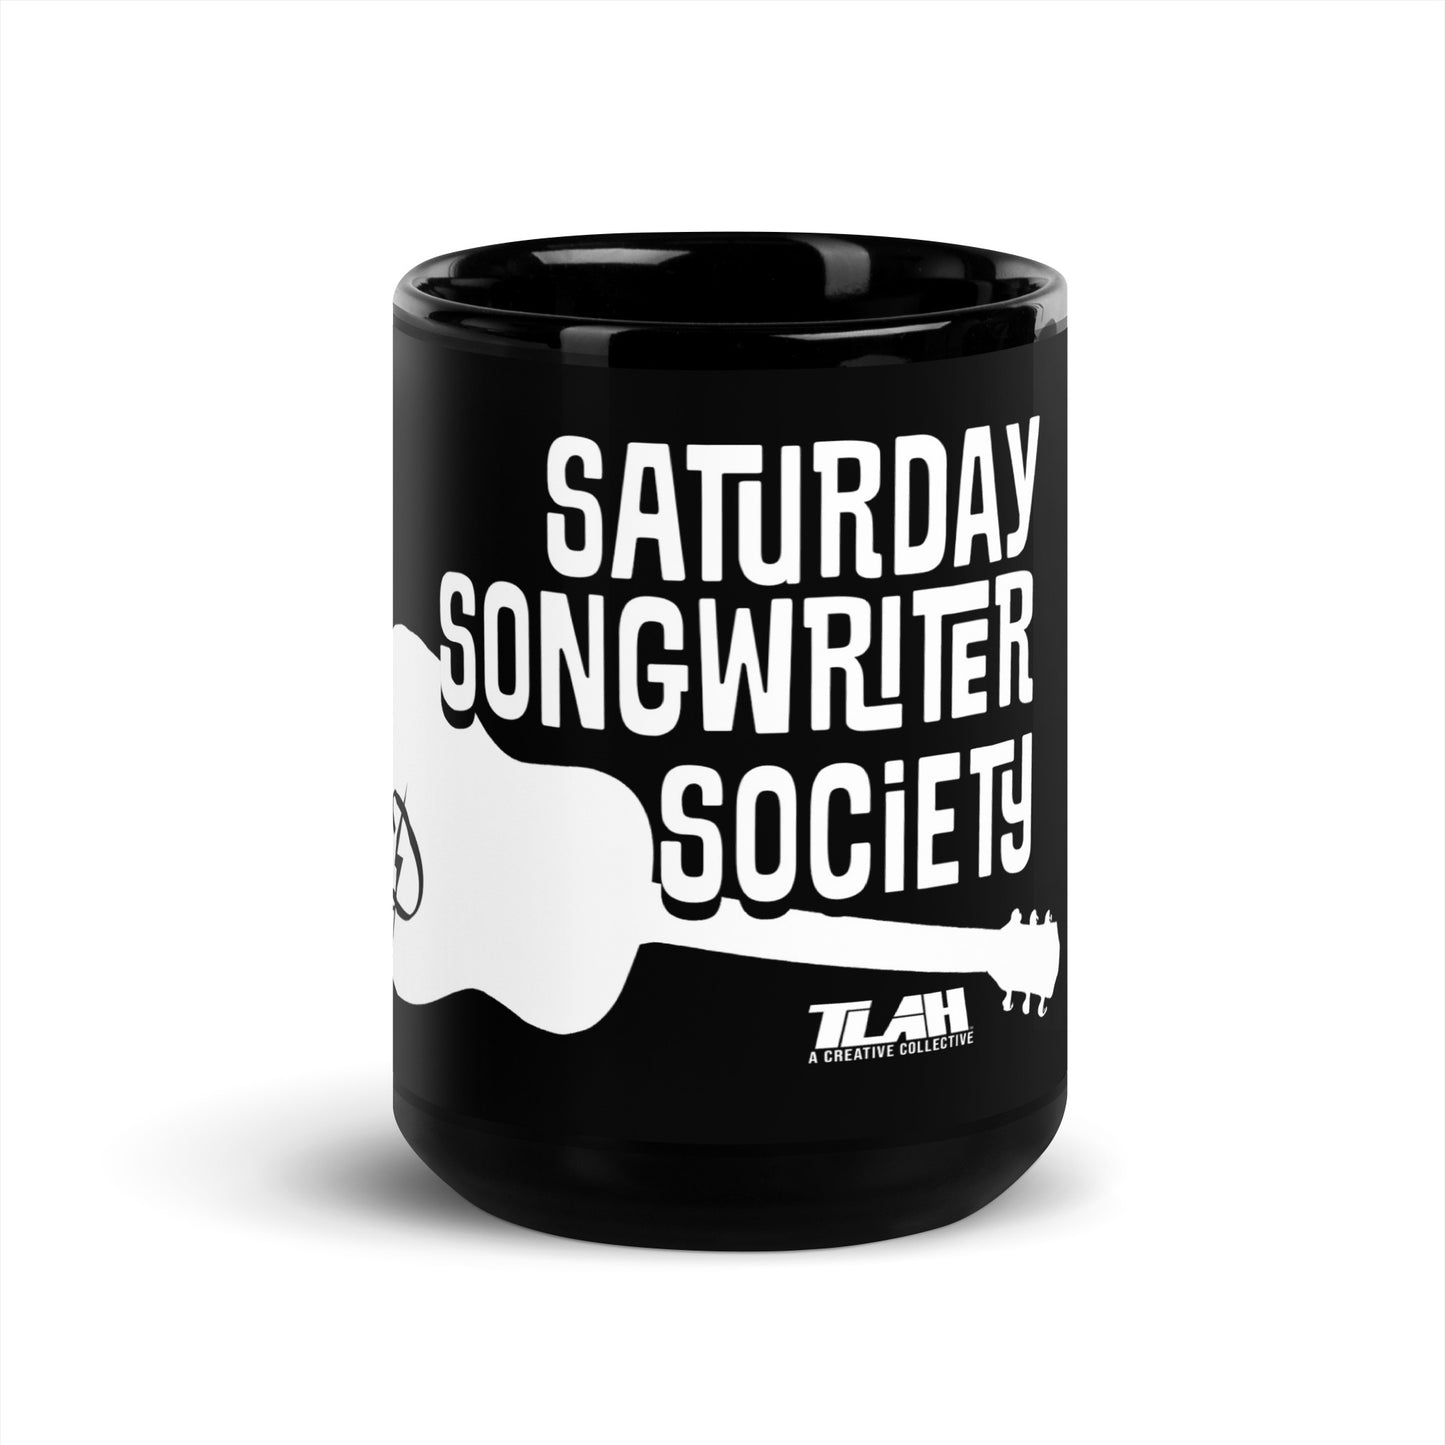 SSS Songwriters Mug